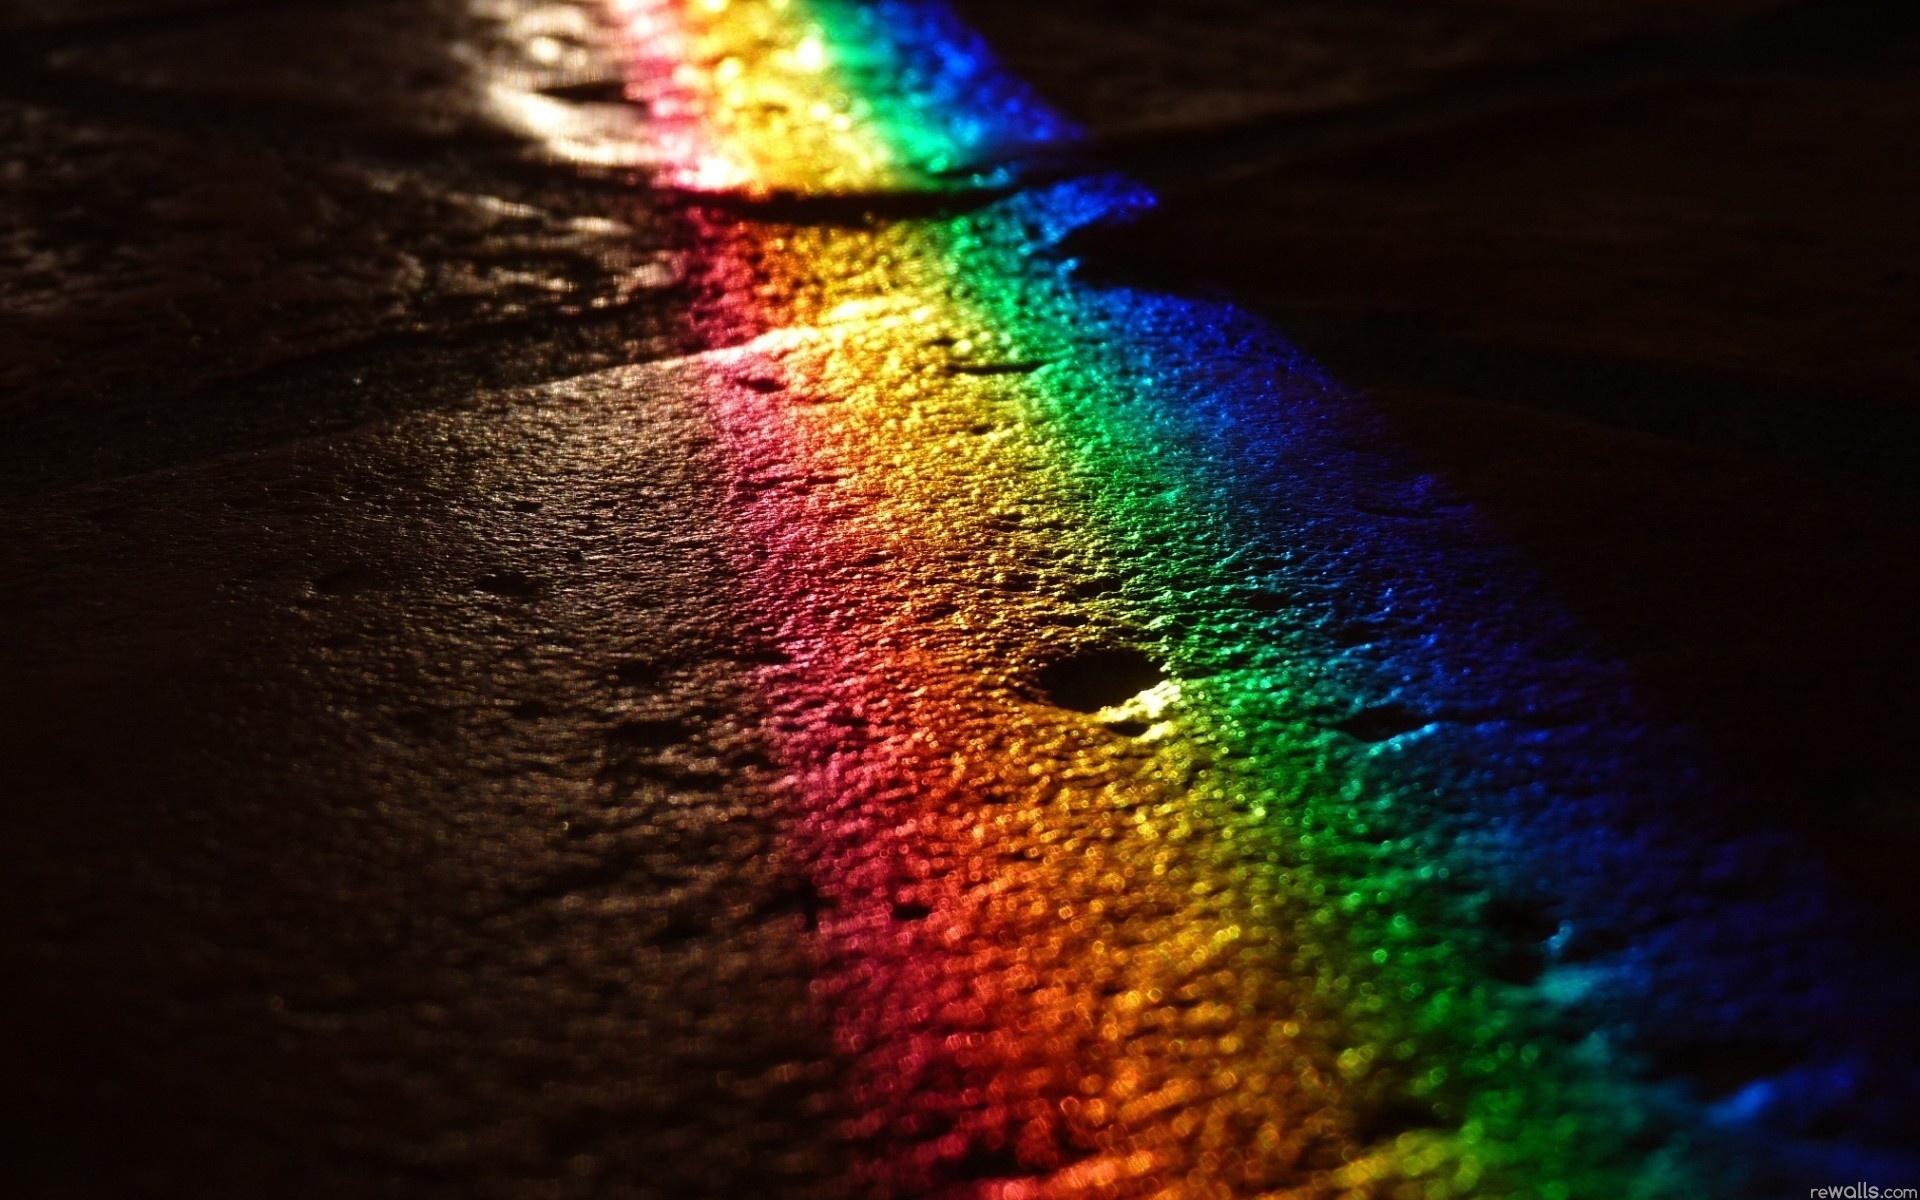 Magic rainbow in the dark night - HD wallpaper